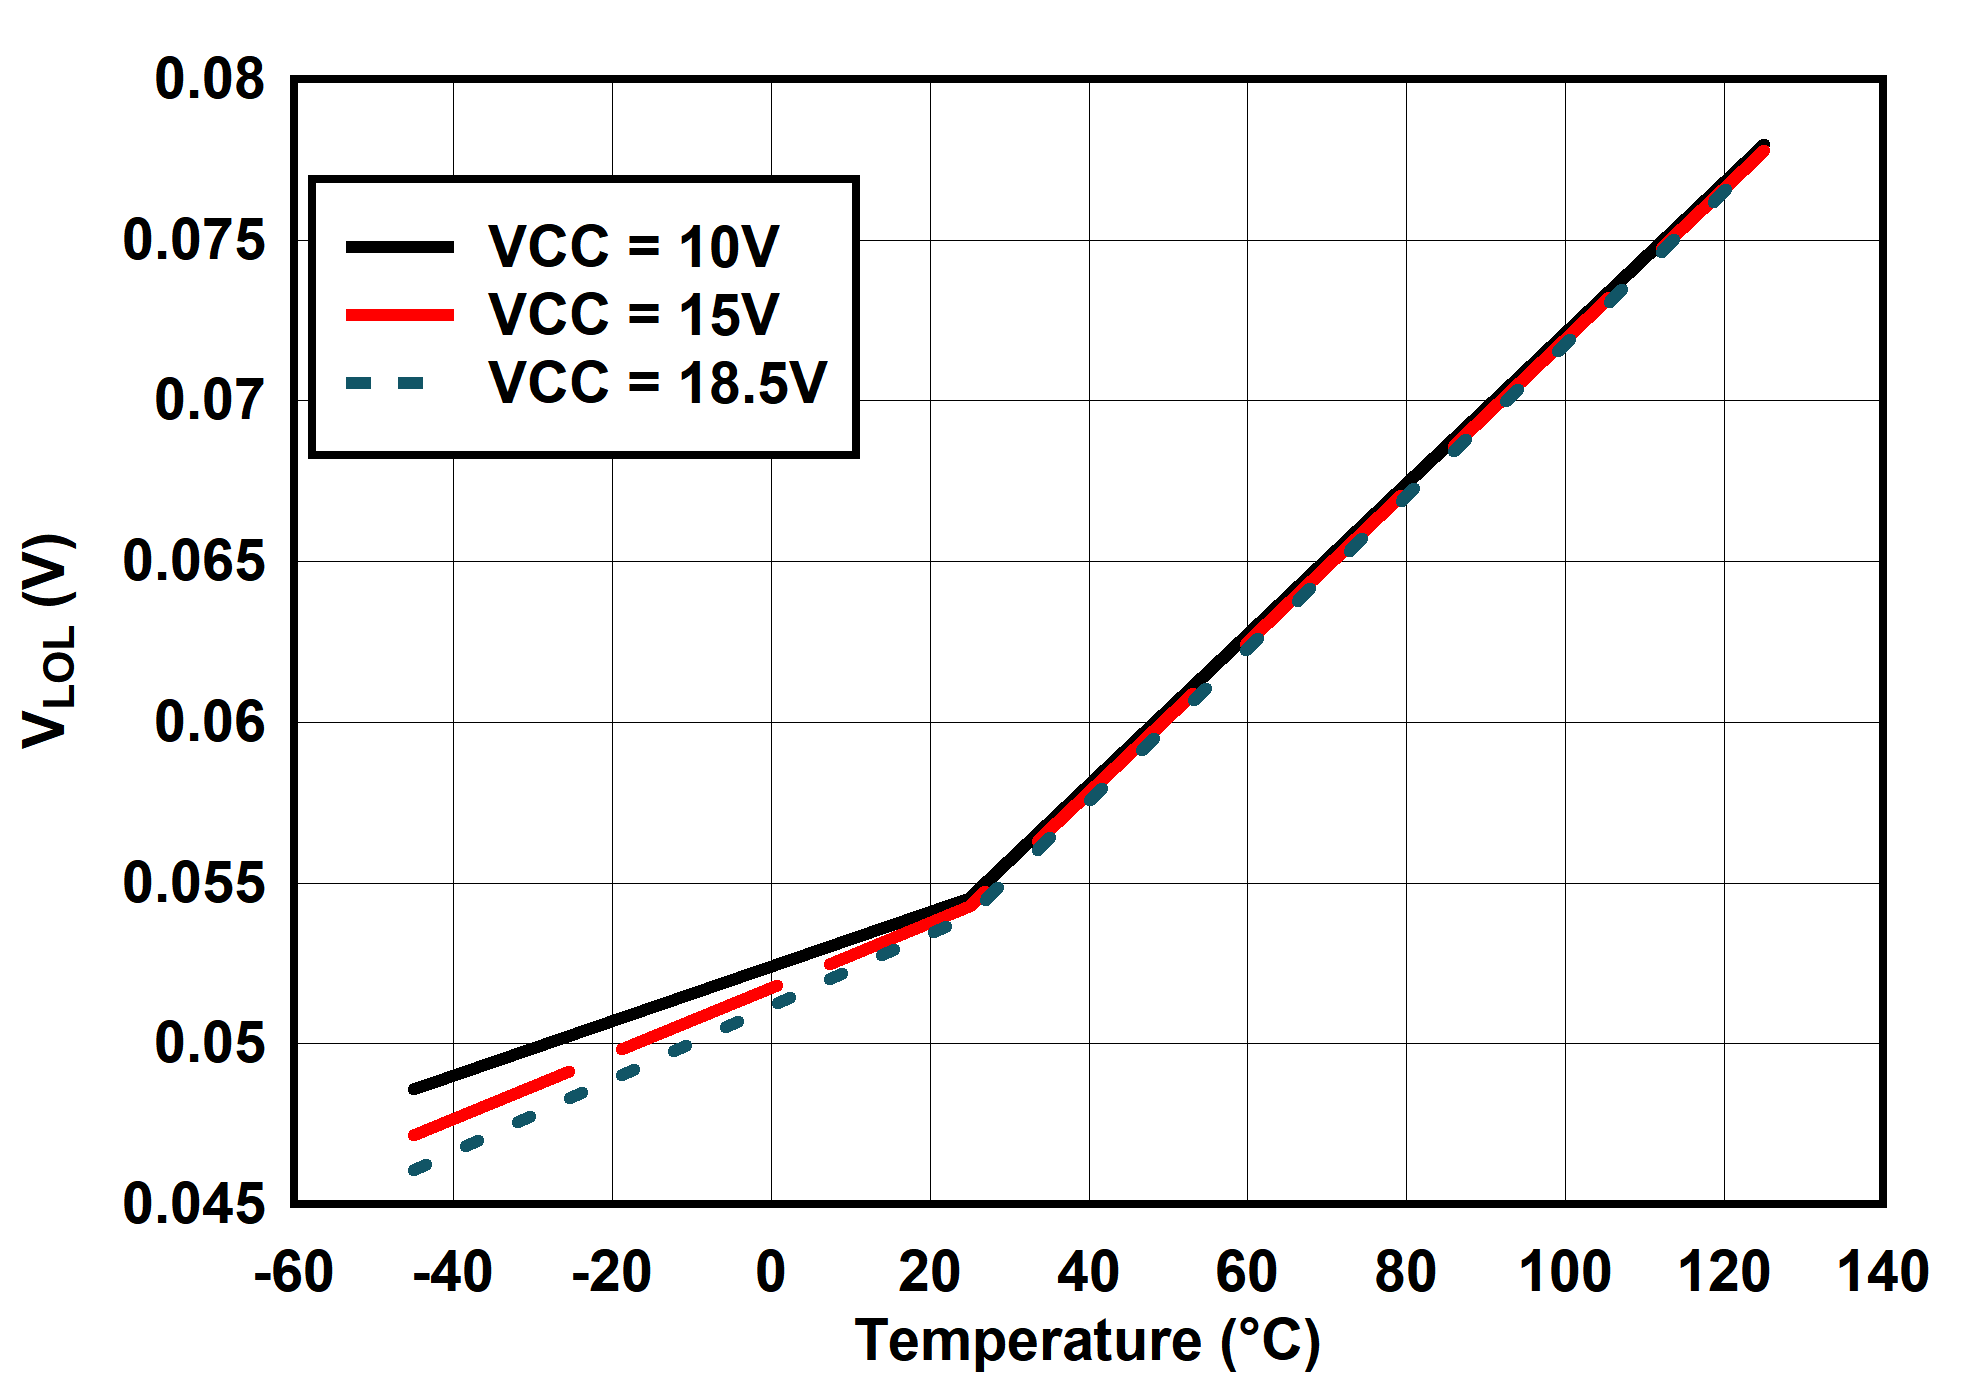 UCC25660 VLOL vs Temperature